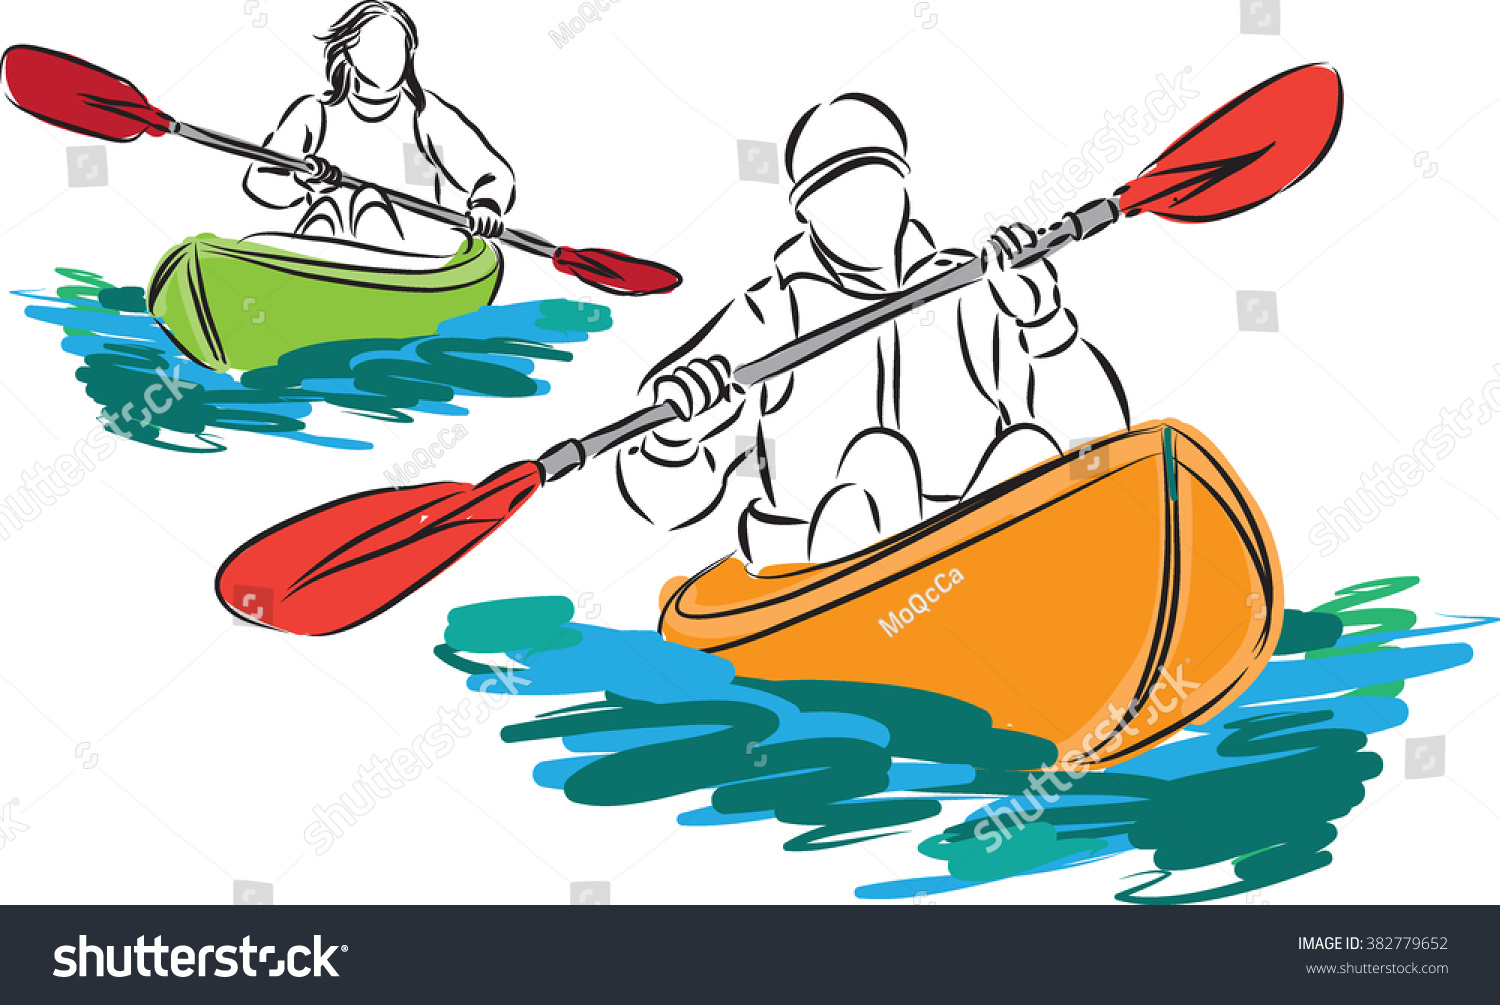 free clipart of kayak - photo #28